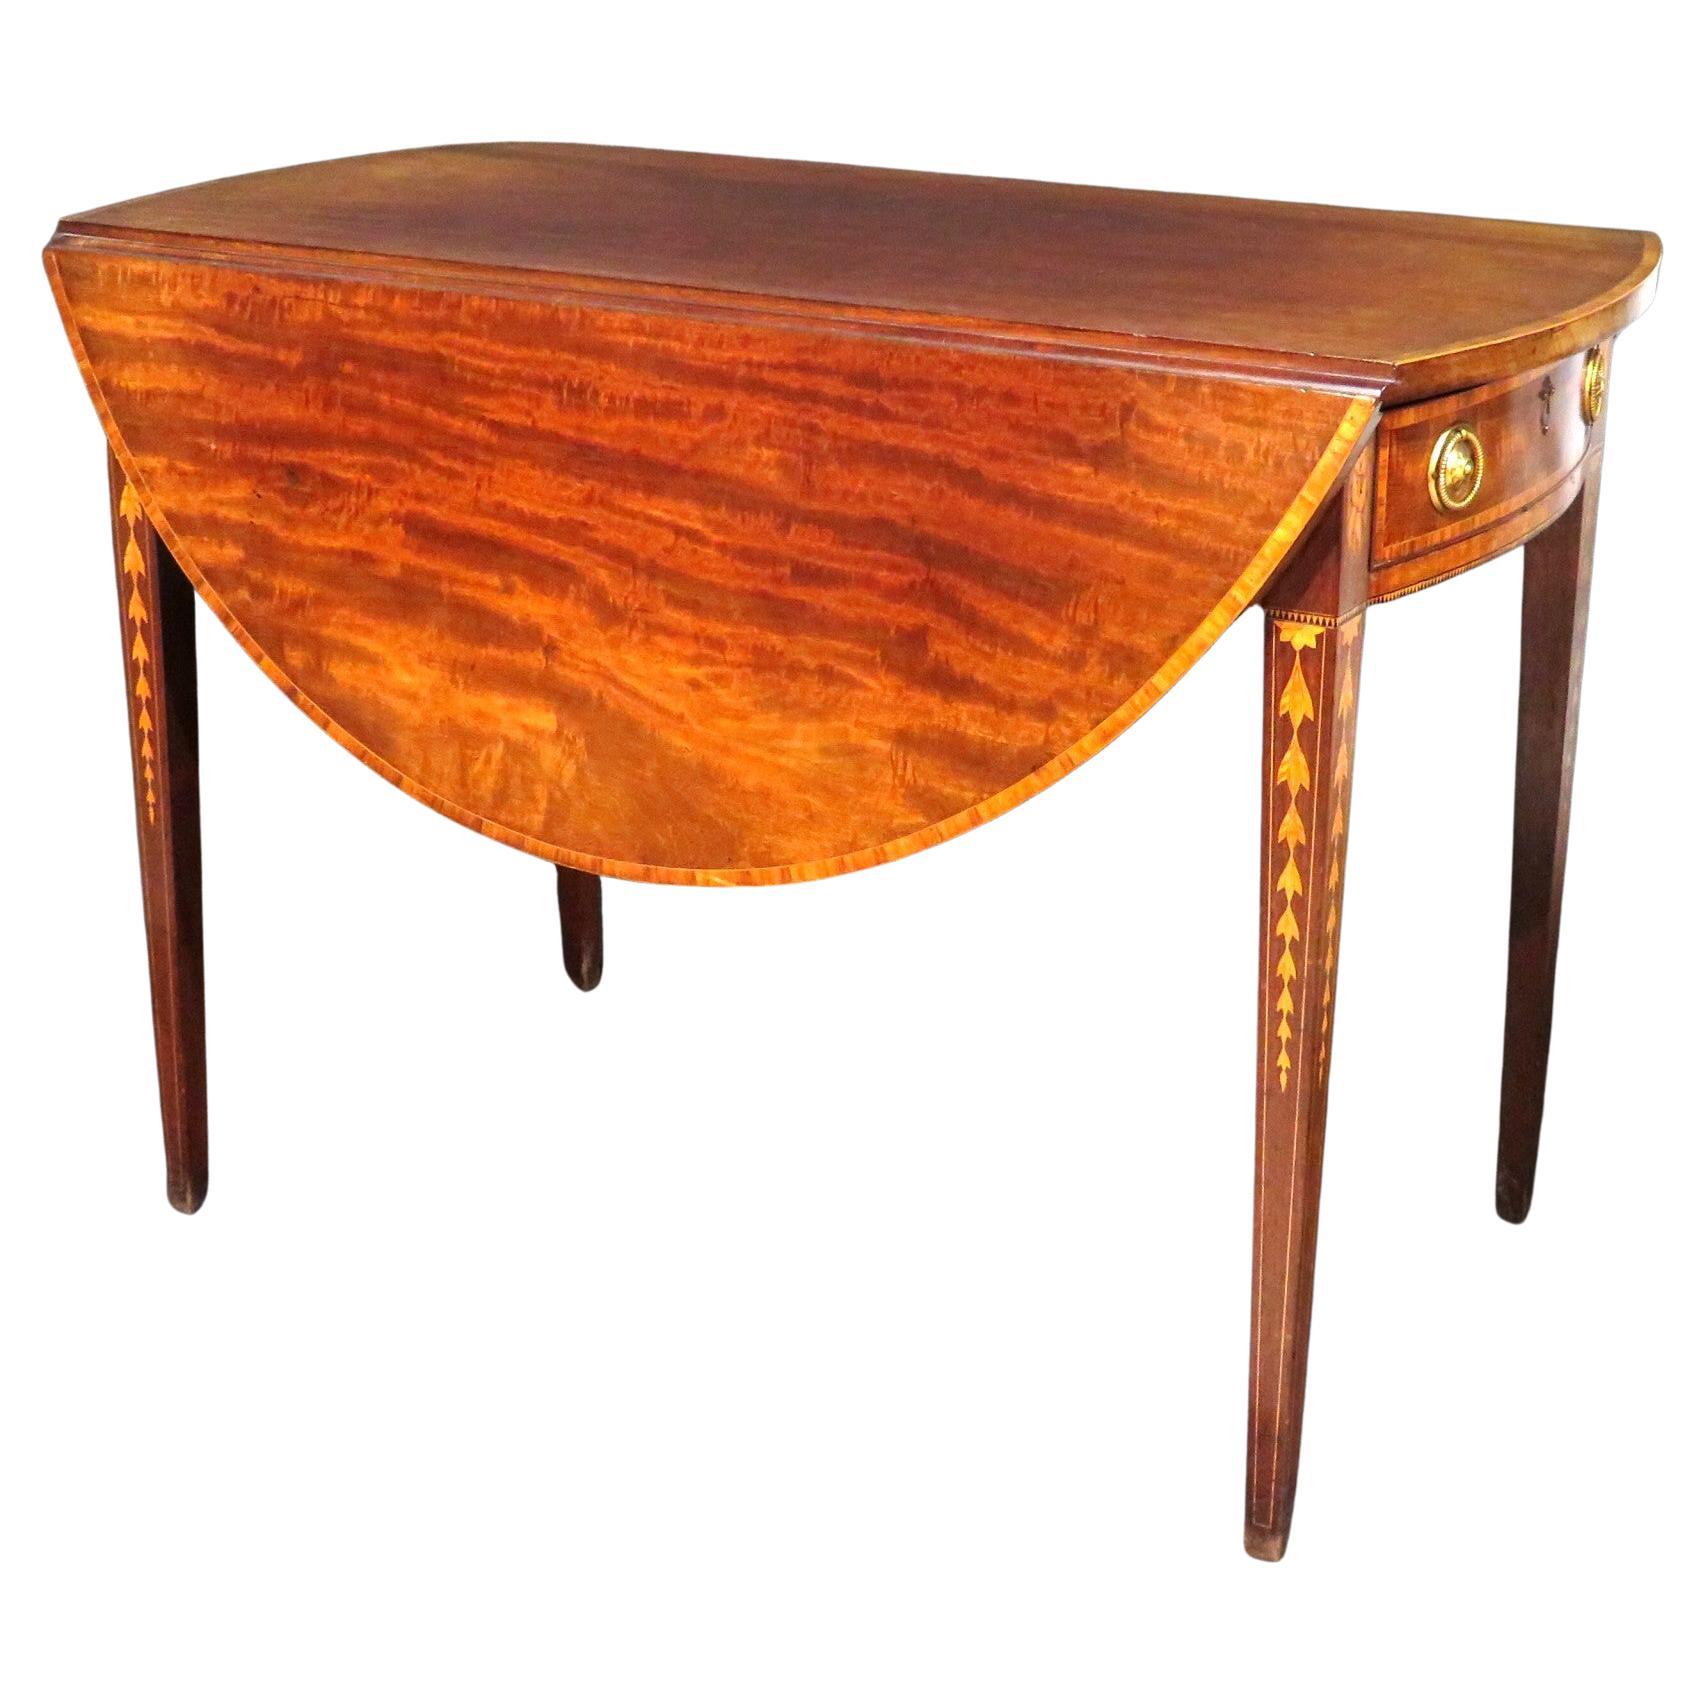 A Very Fine Inlaid Georgian Mahogany Pembroke Table, U.K. Circa 1800 For Sale